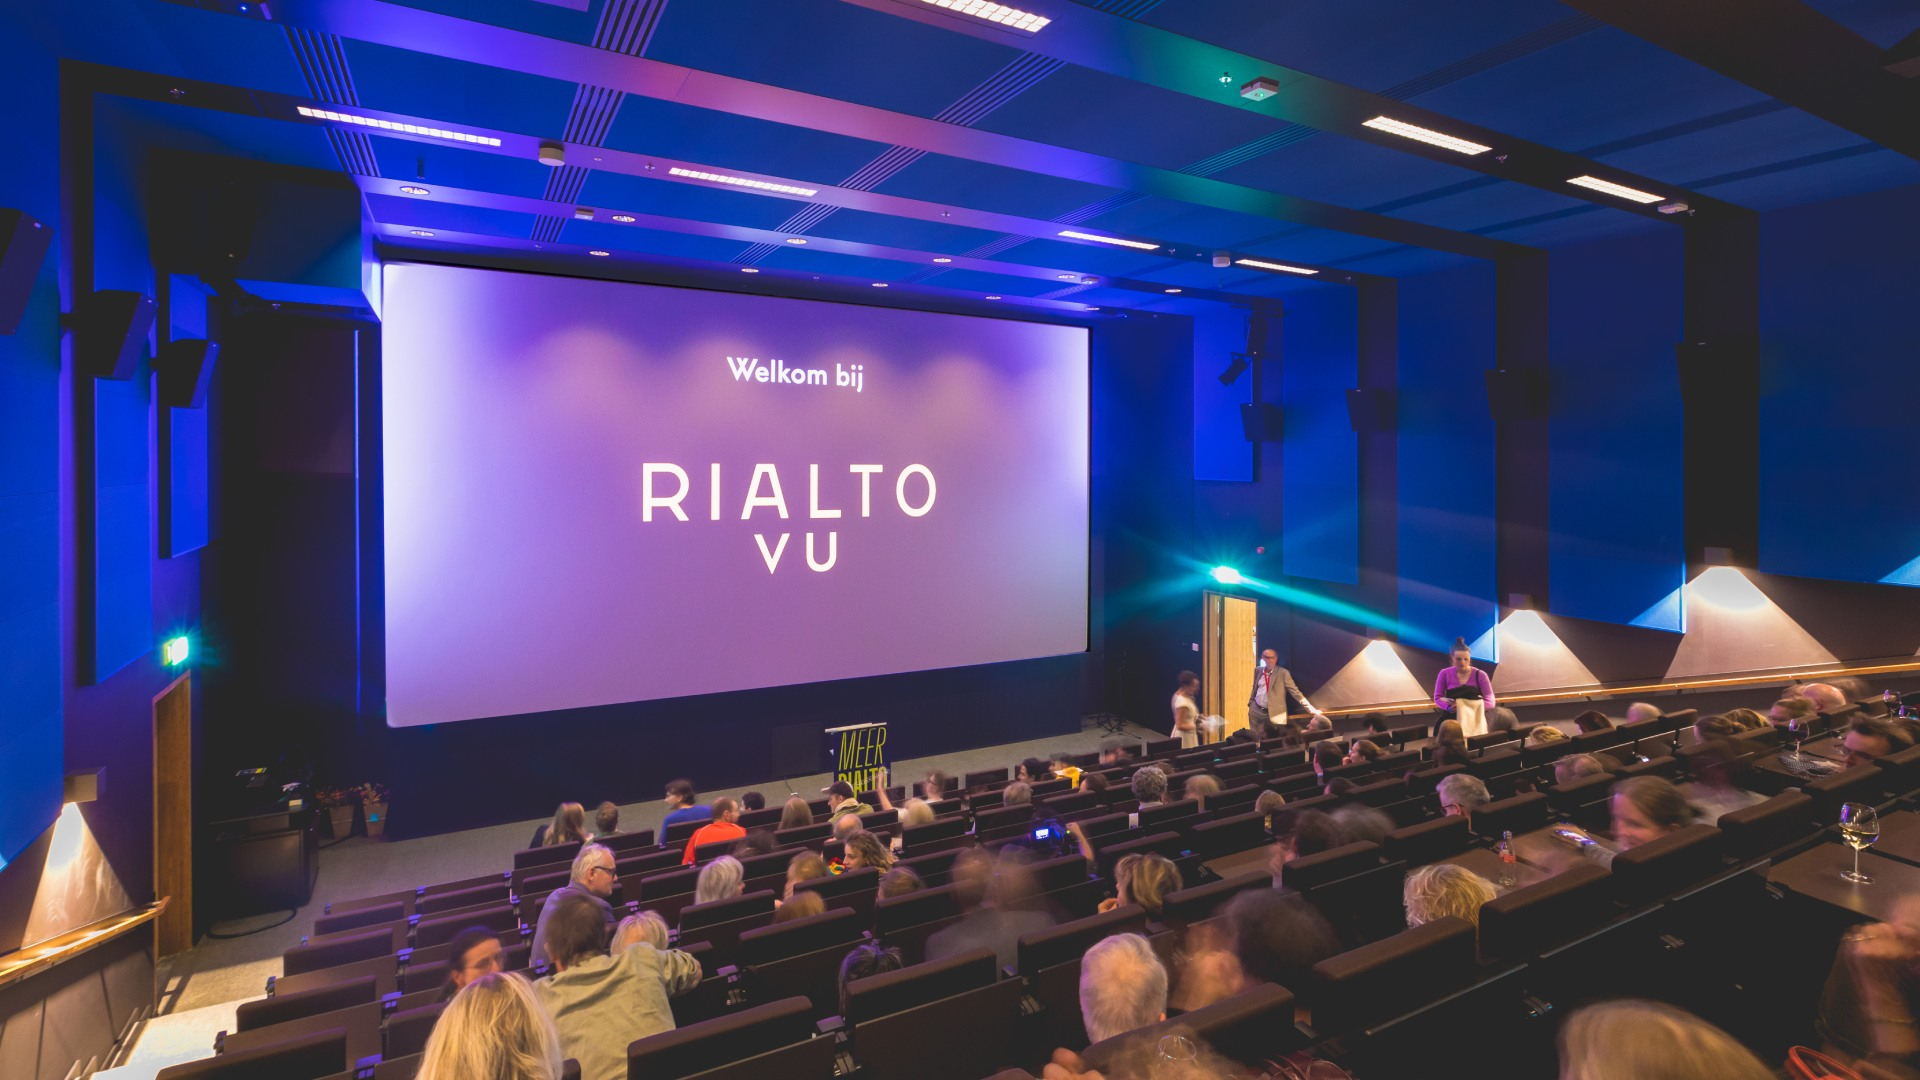 Rialto VU screening room - credits: Melanie Lemahieu